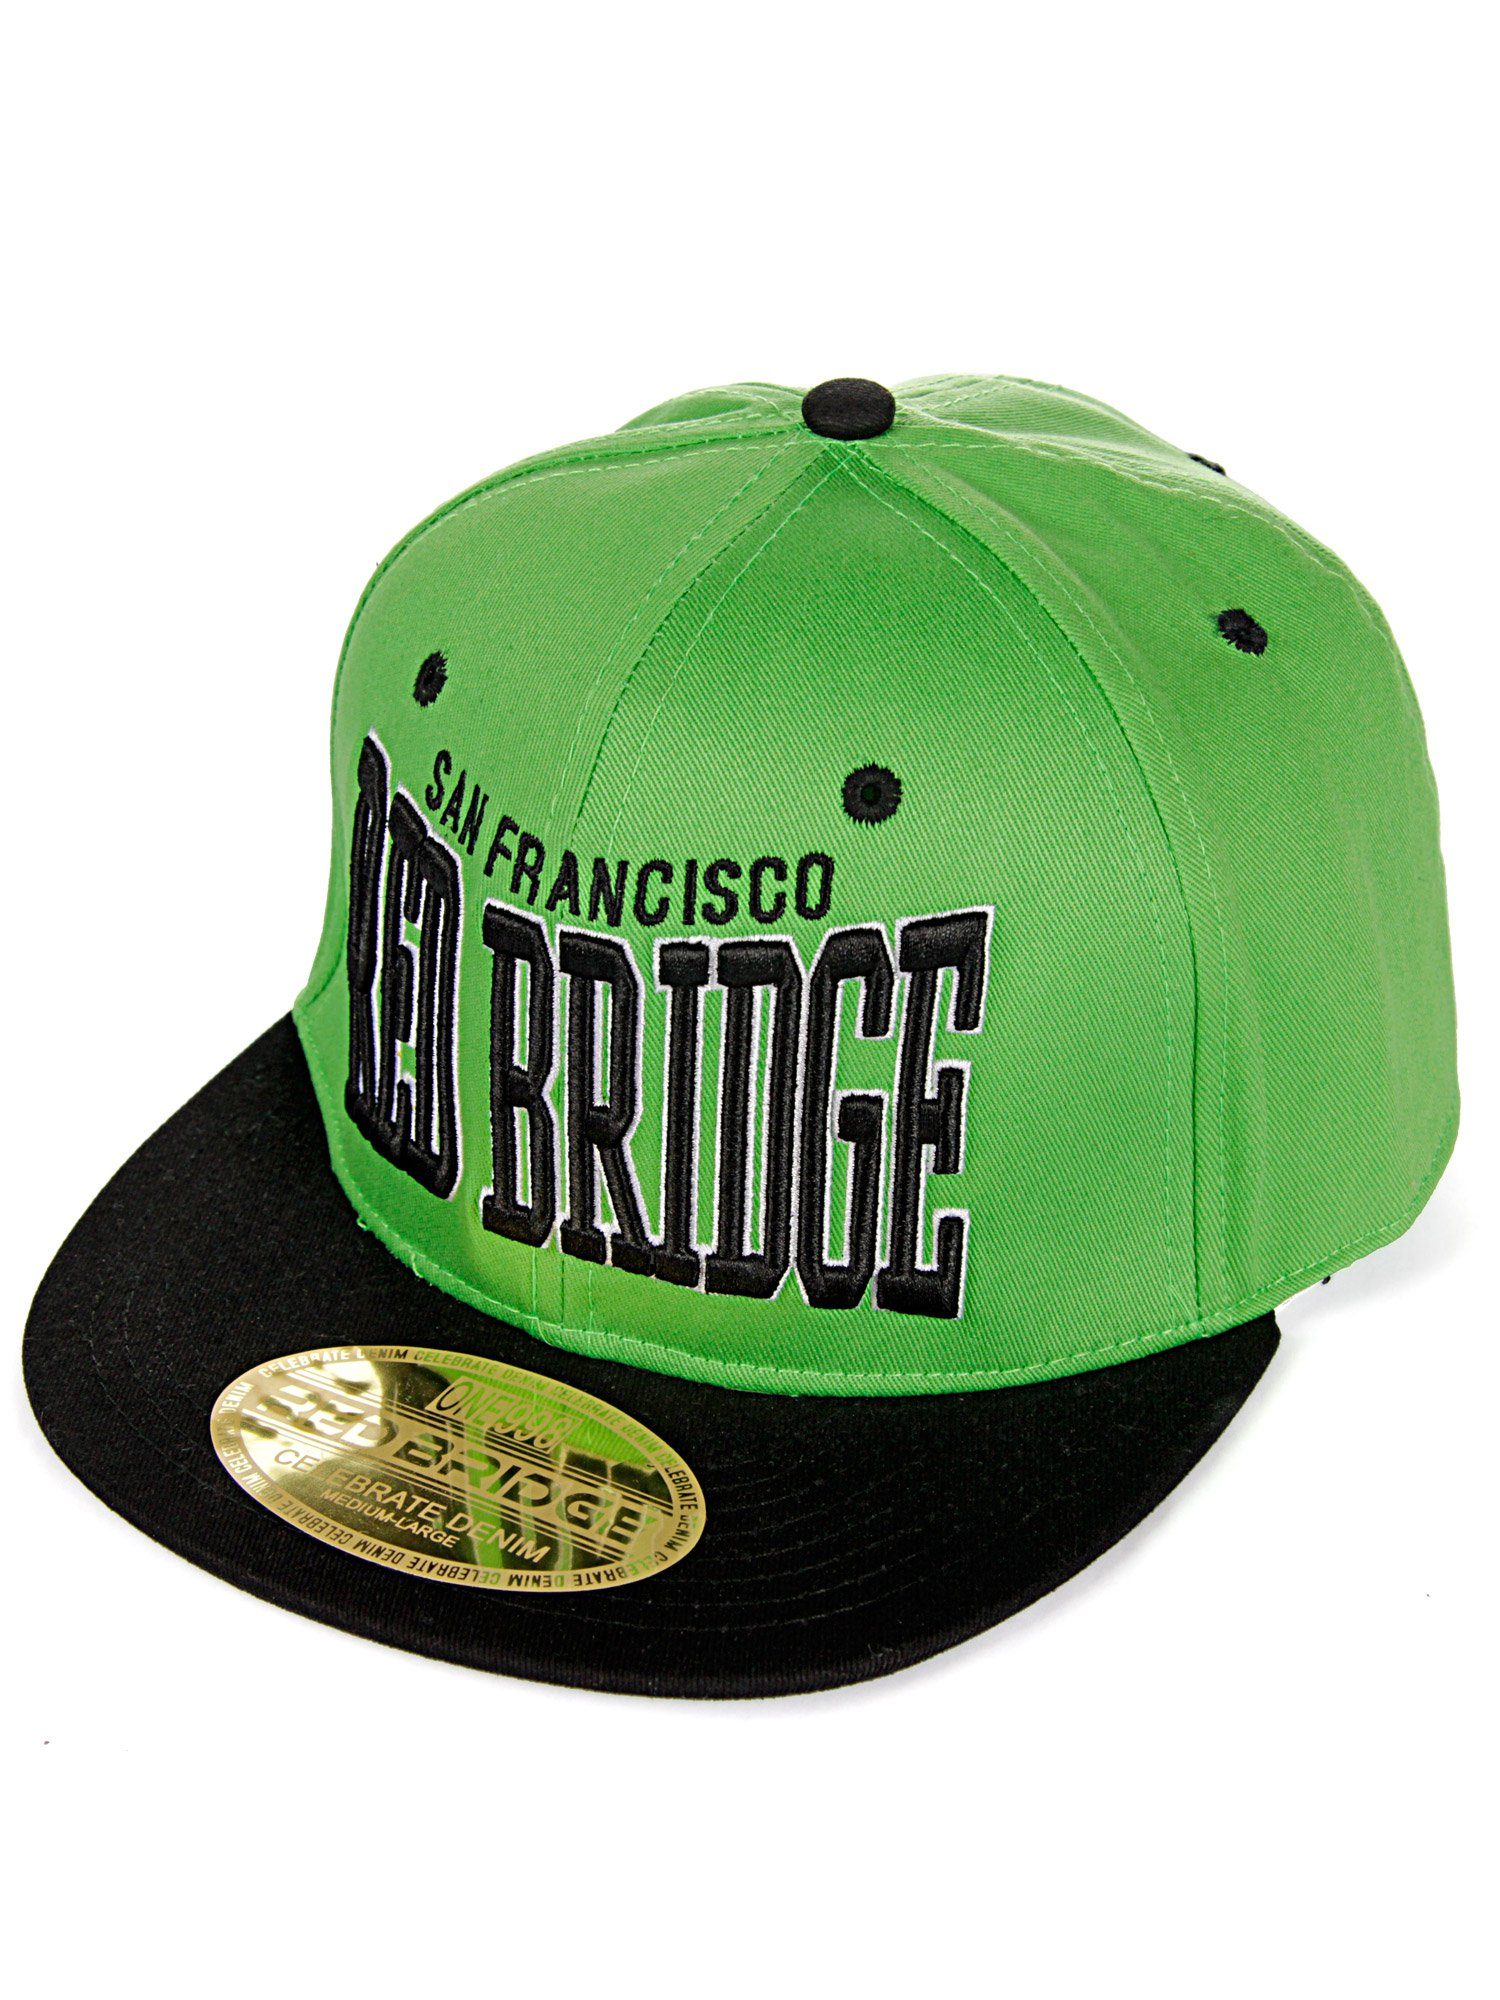 RedBridge Baseball Cap Schirm mit Durham kontrastfarbigem grün-schwarz